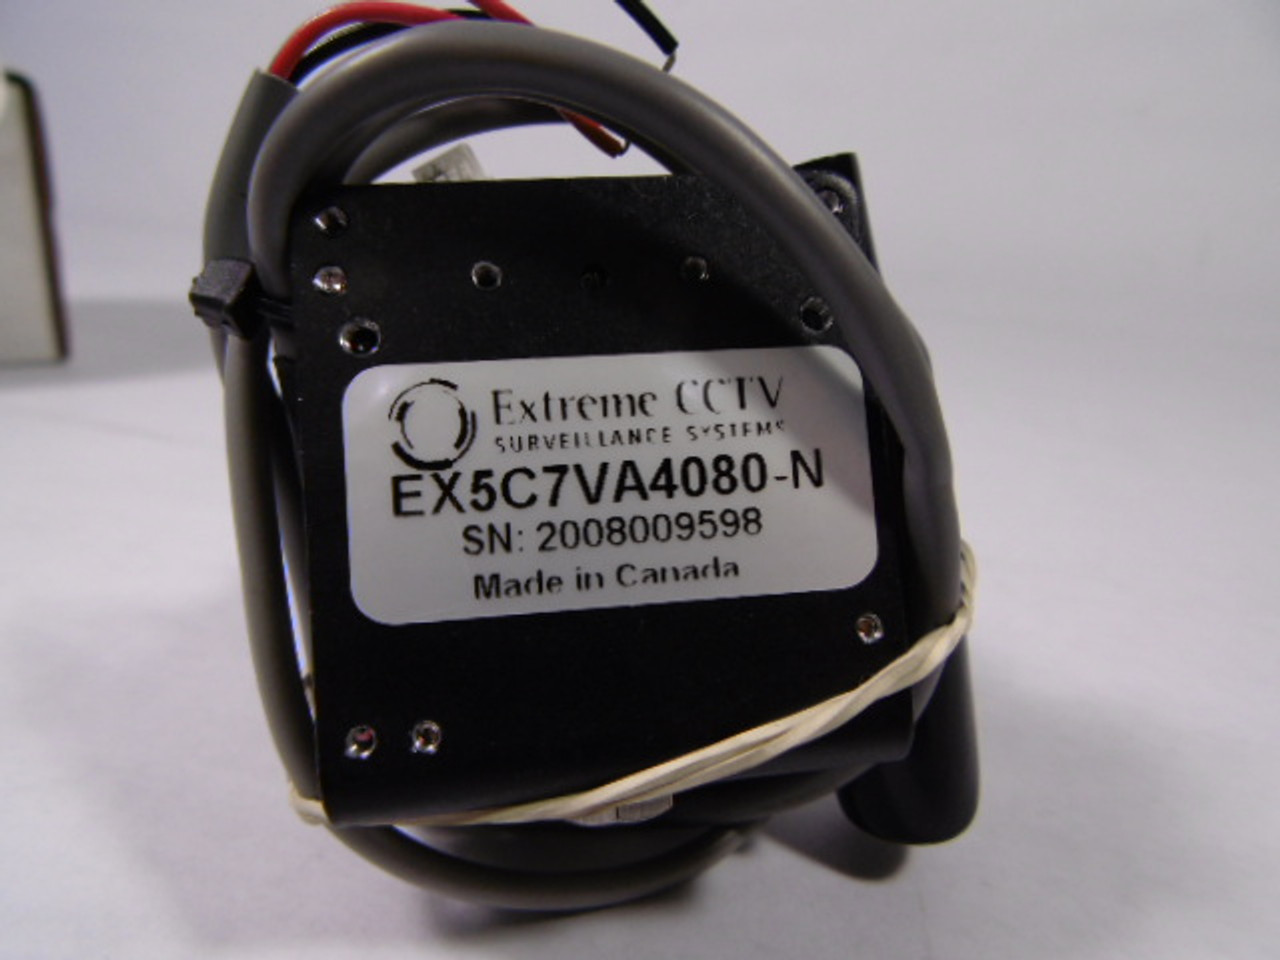 Extreme CCTV EX5C7VA4080-N CCTV Camera 4.0-9.0mm Lens USED